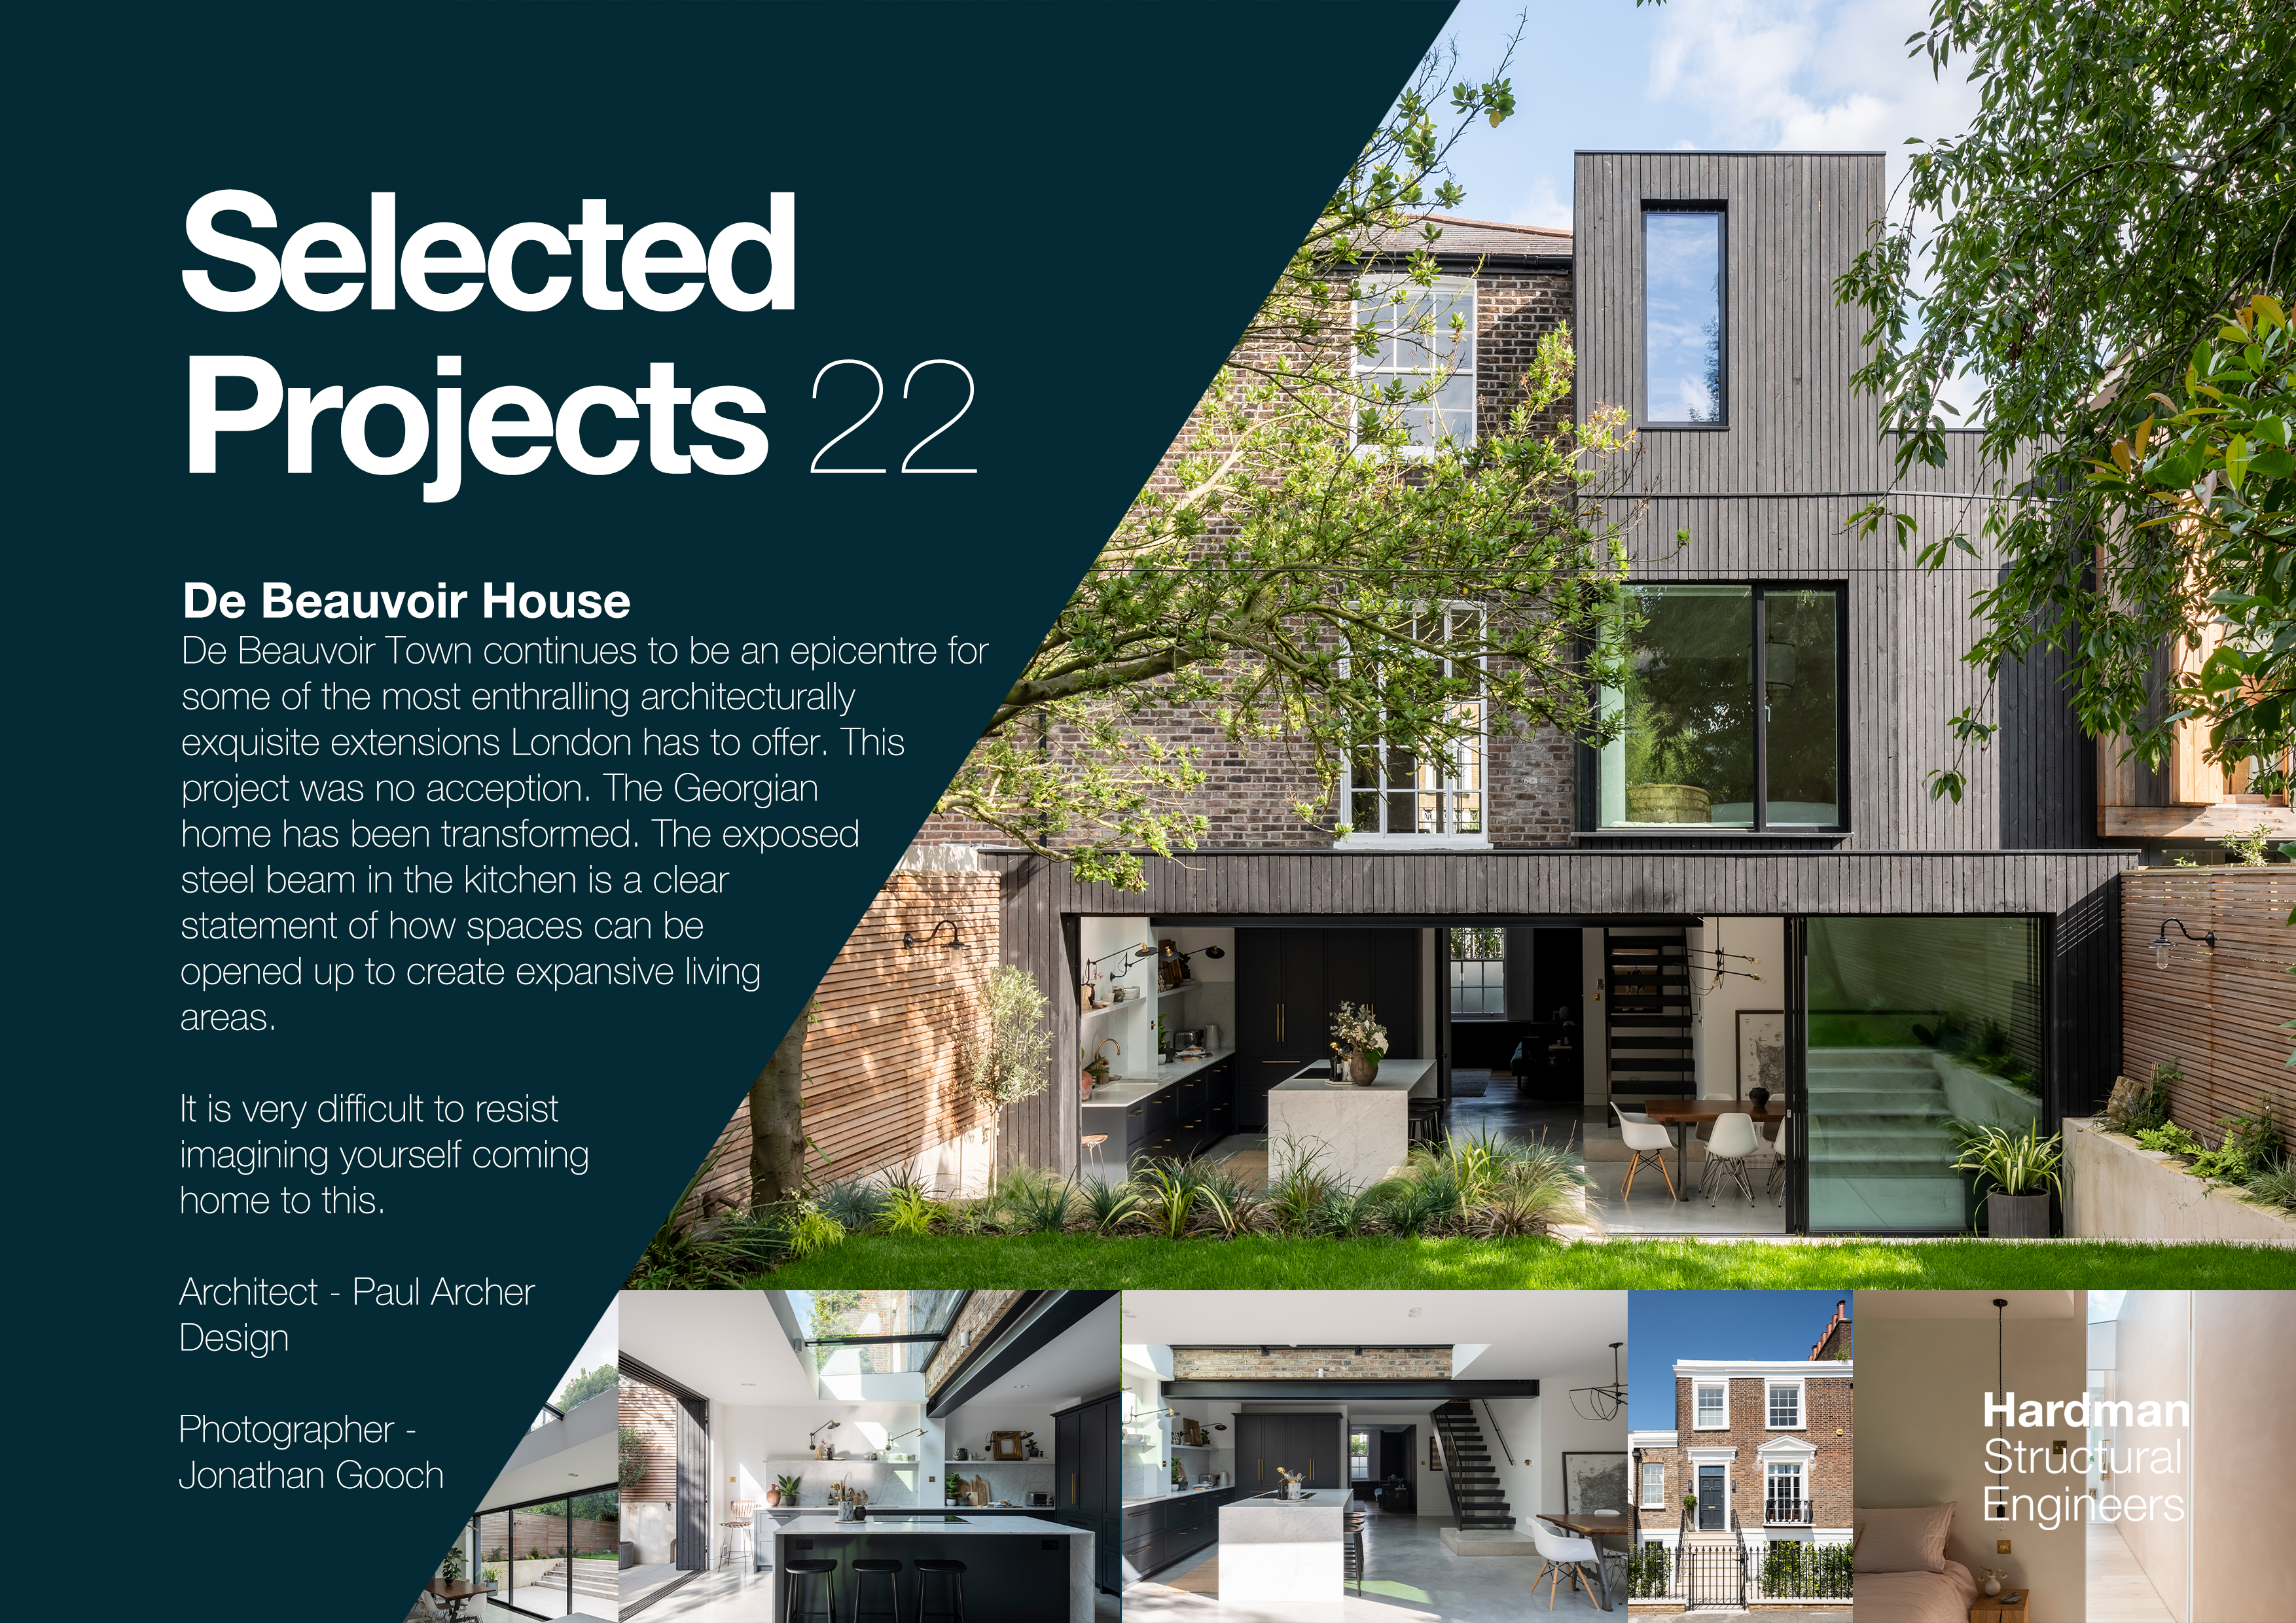 Selected Projects - De Beauvoir House